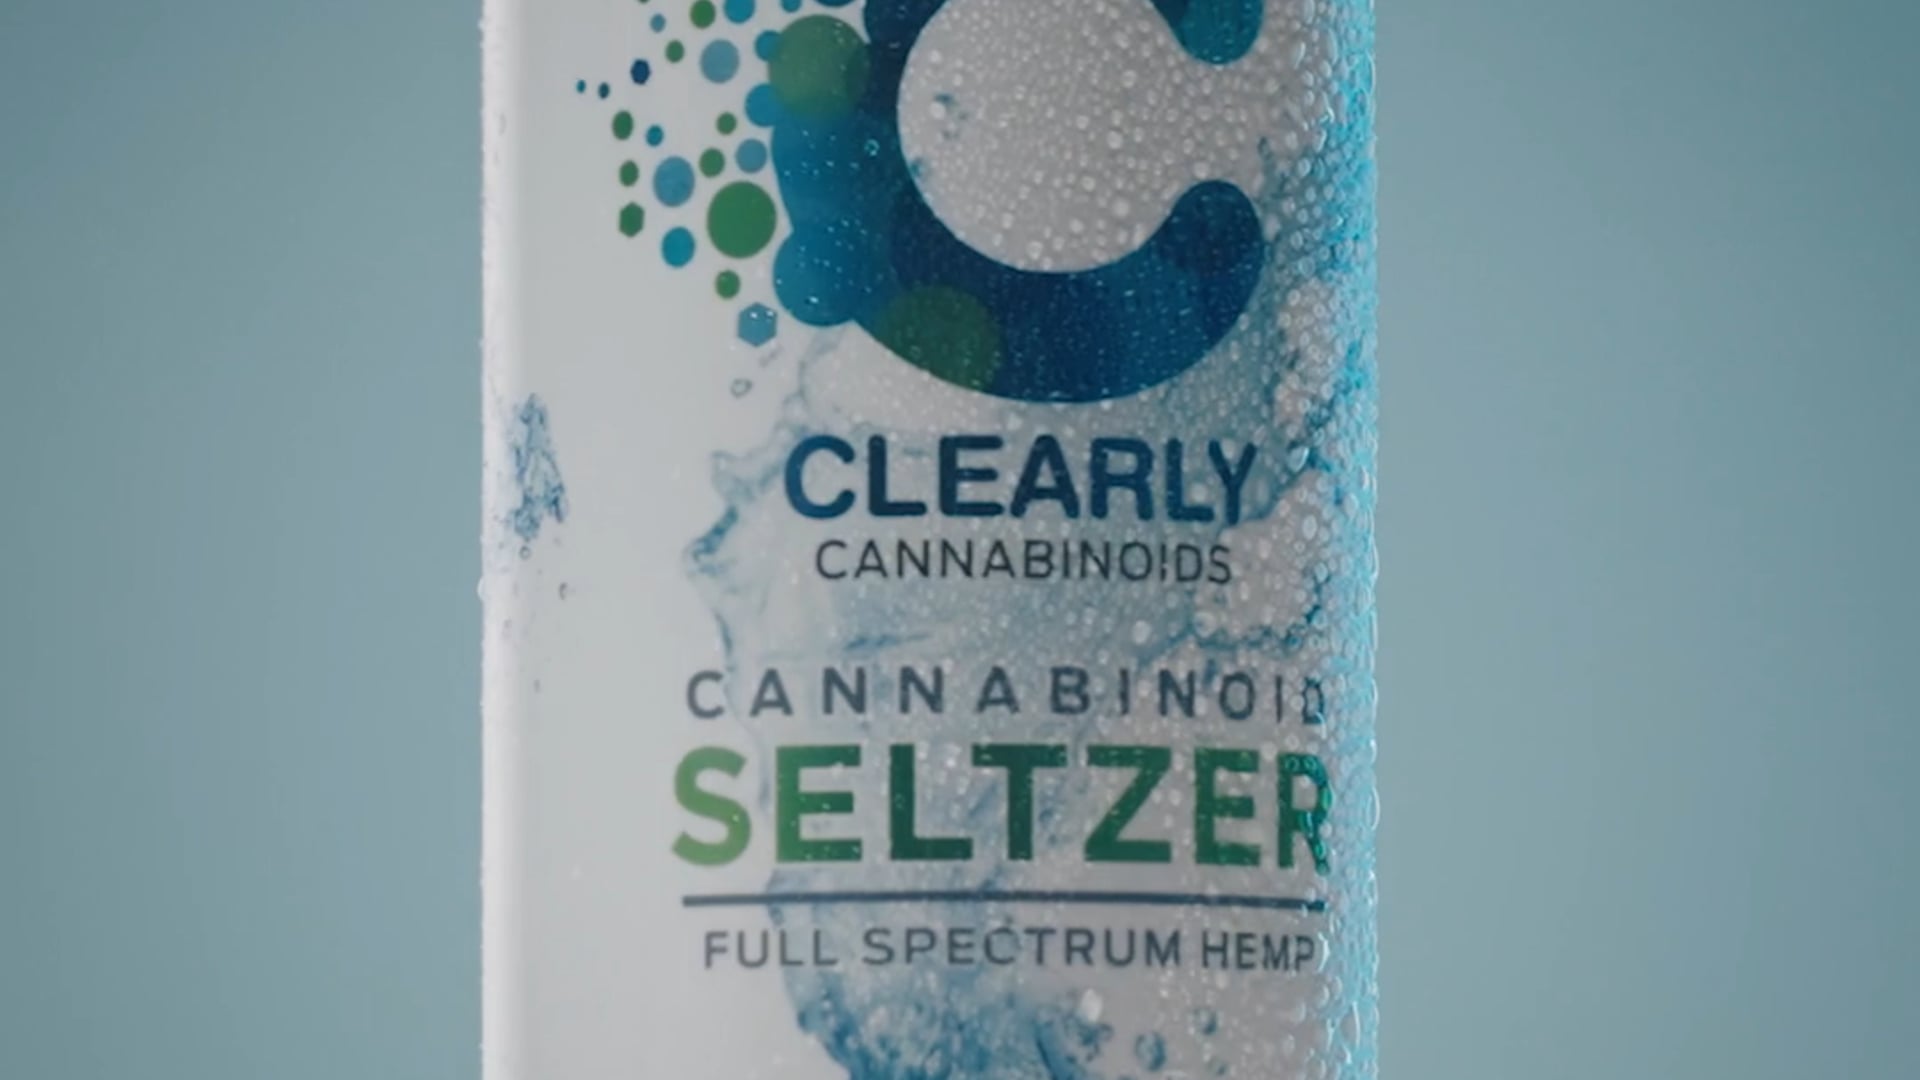 Nova Farms - Clearly CBD Seltzer - Social Ad